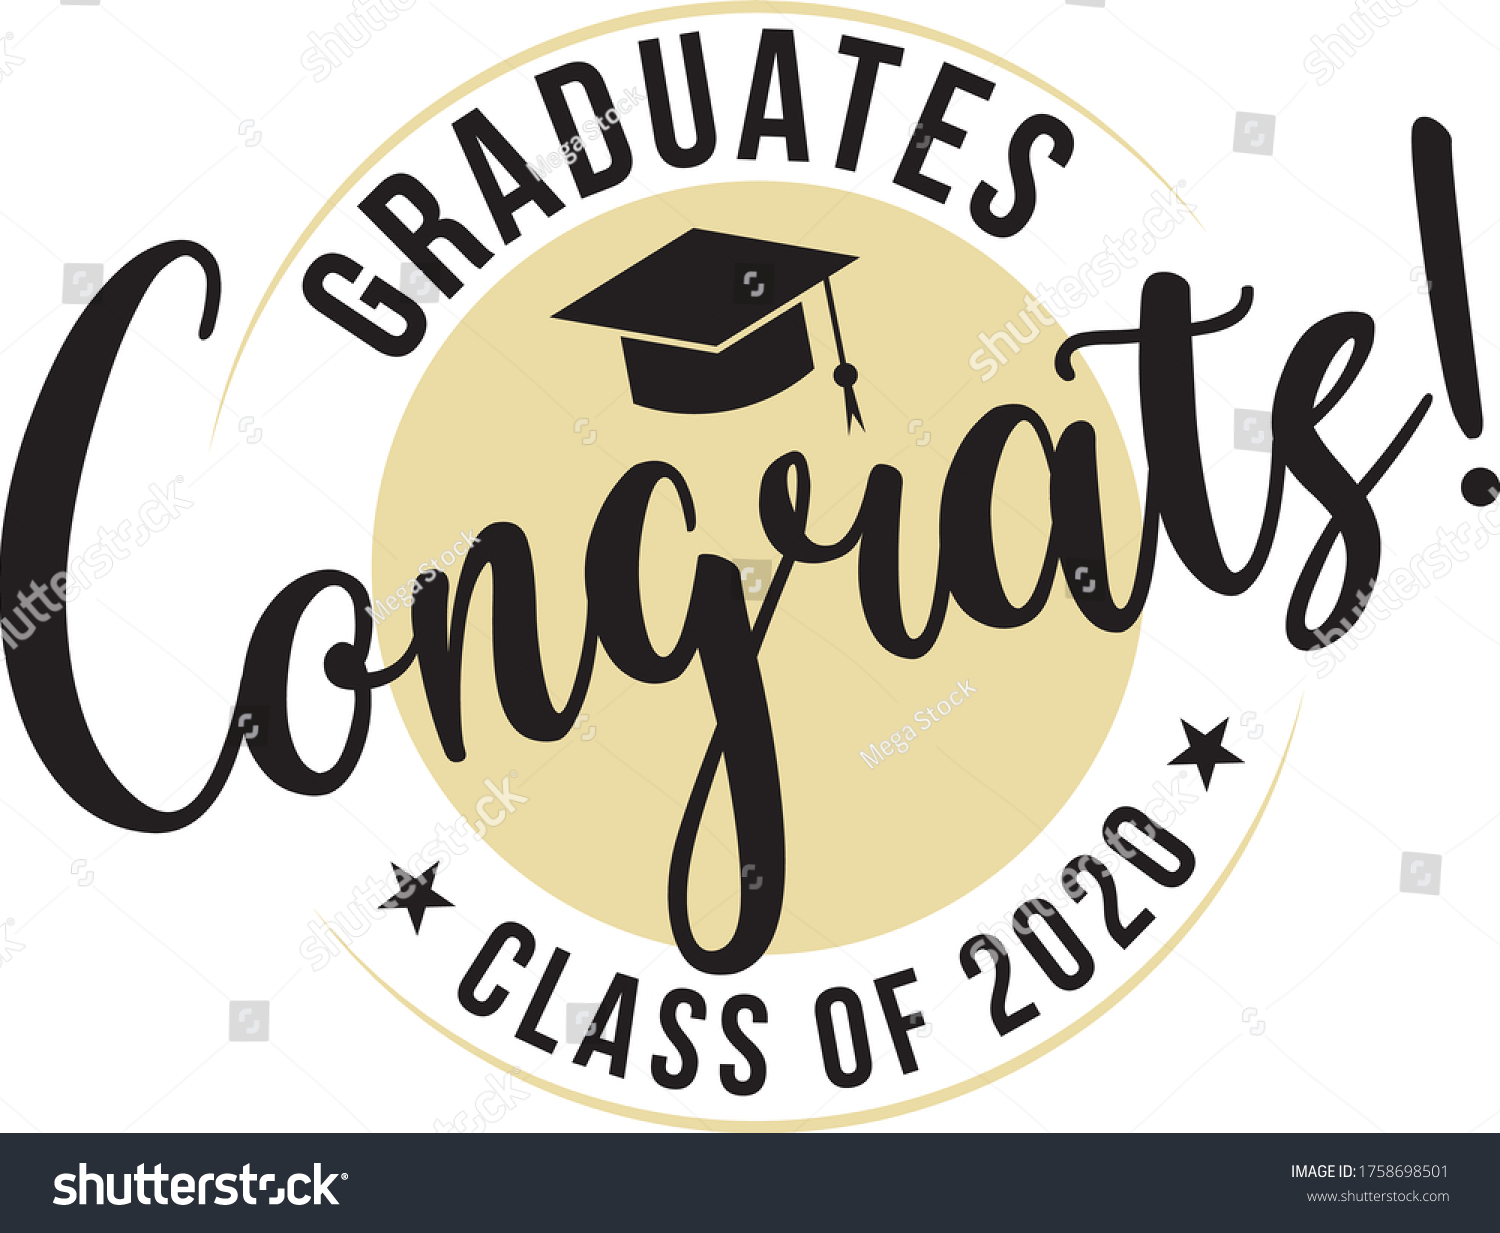 Congratulations Graduates 2020 Celebration Text Poster Stock Vector Royalty Free 1758698501 